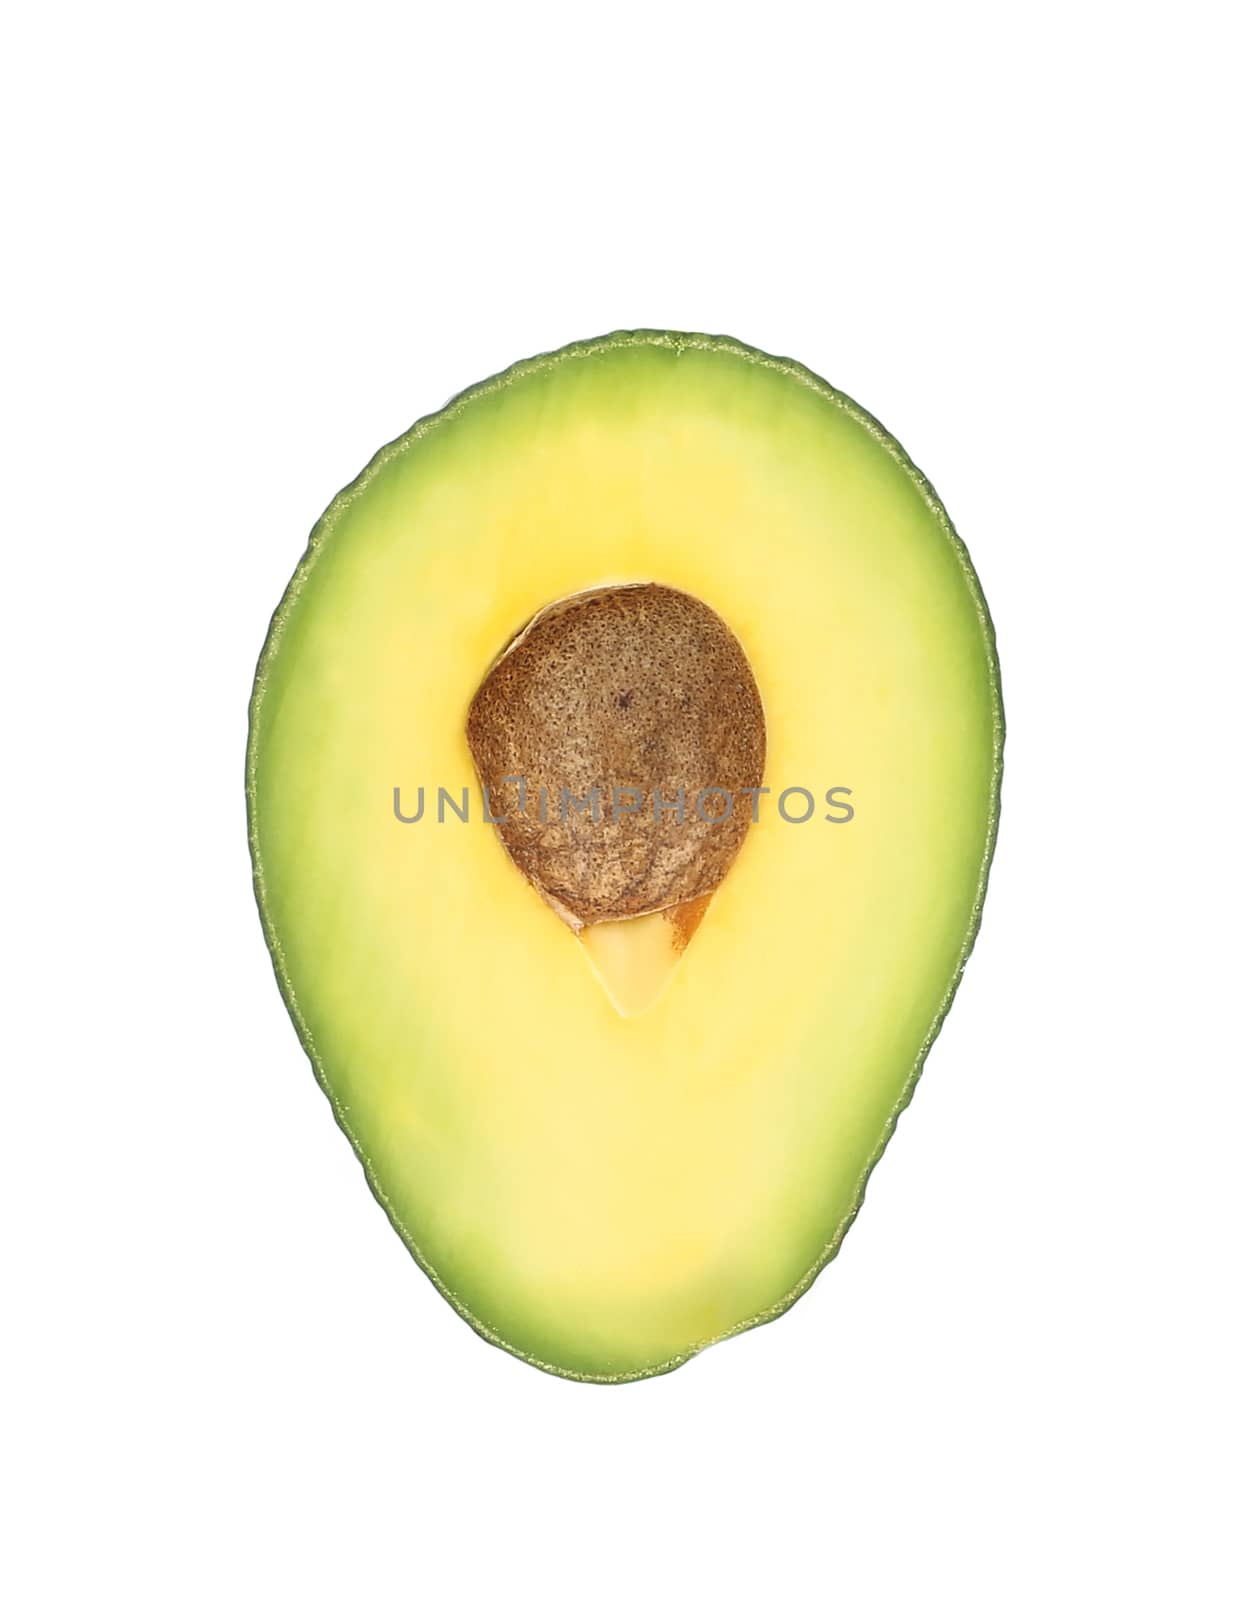 Slice of avocado. Isolated on a white background.